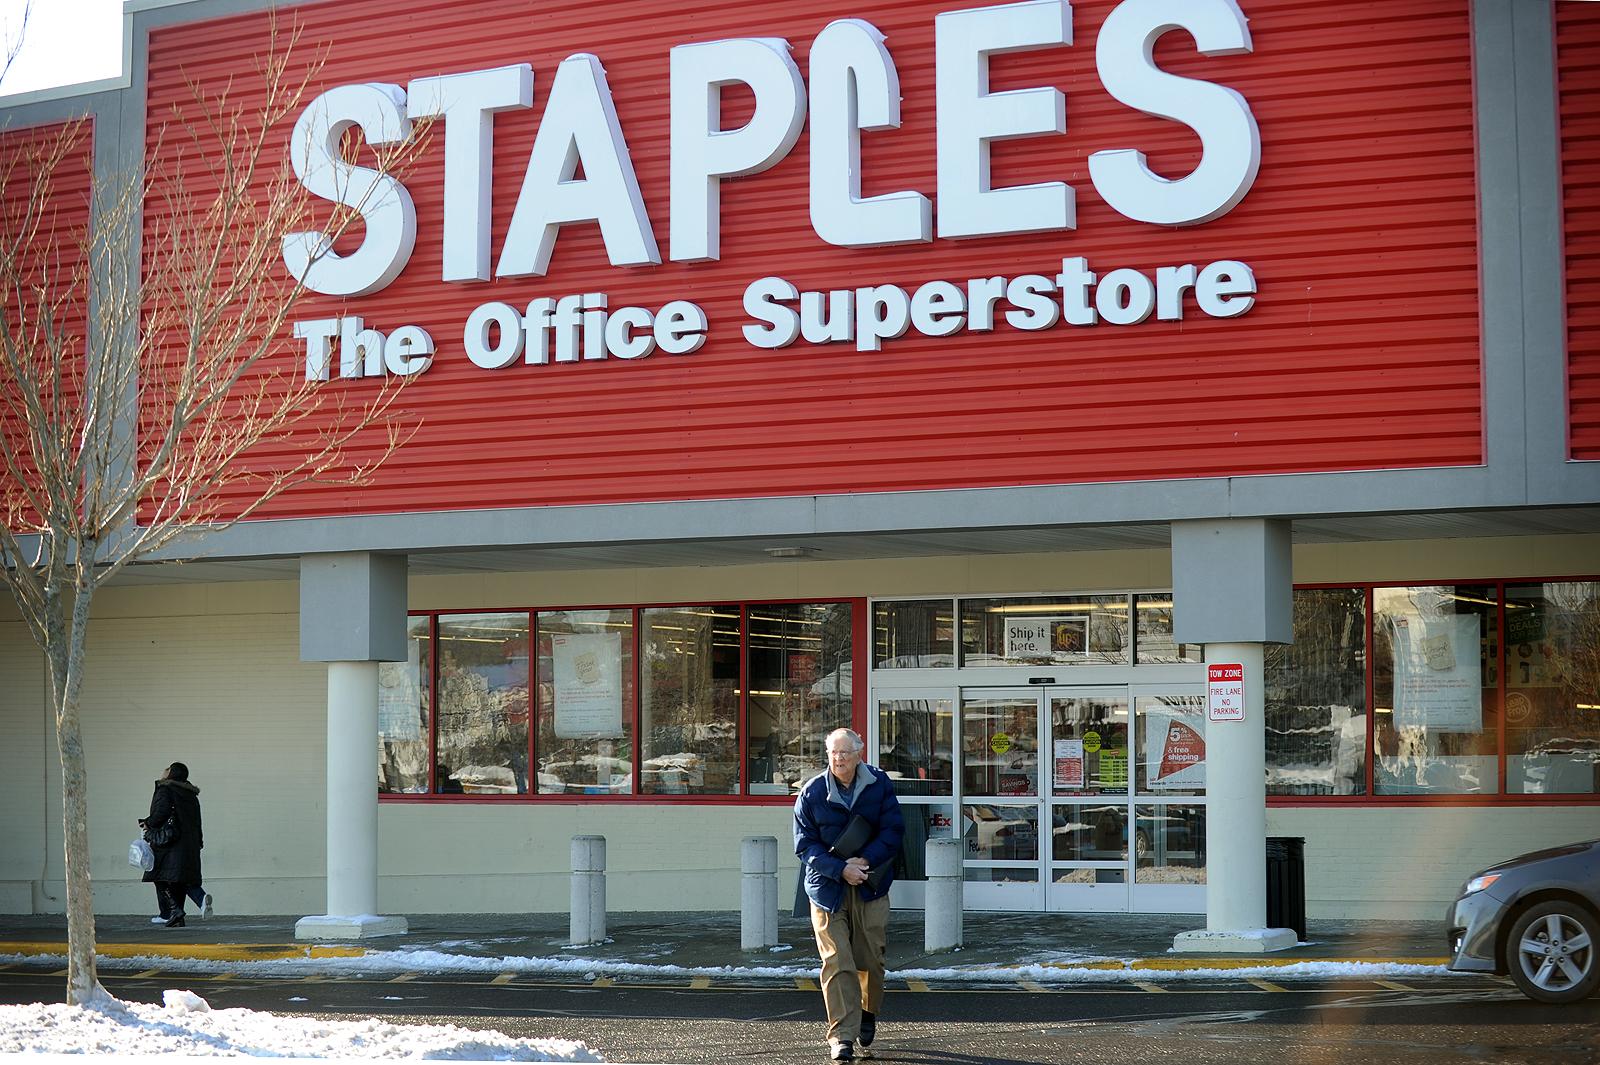 Staples to close 70 more stores - ABC7 Chicago